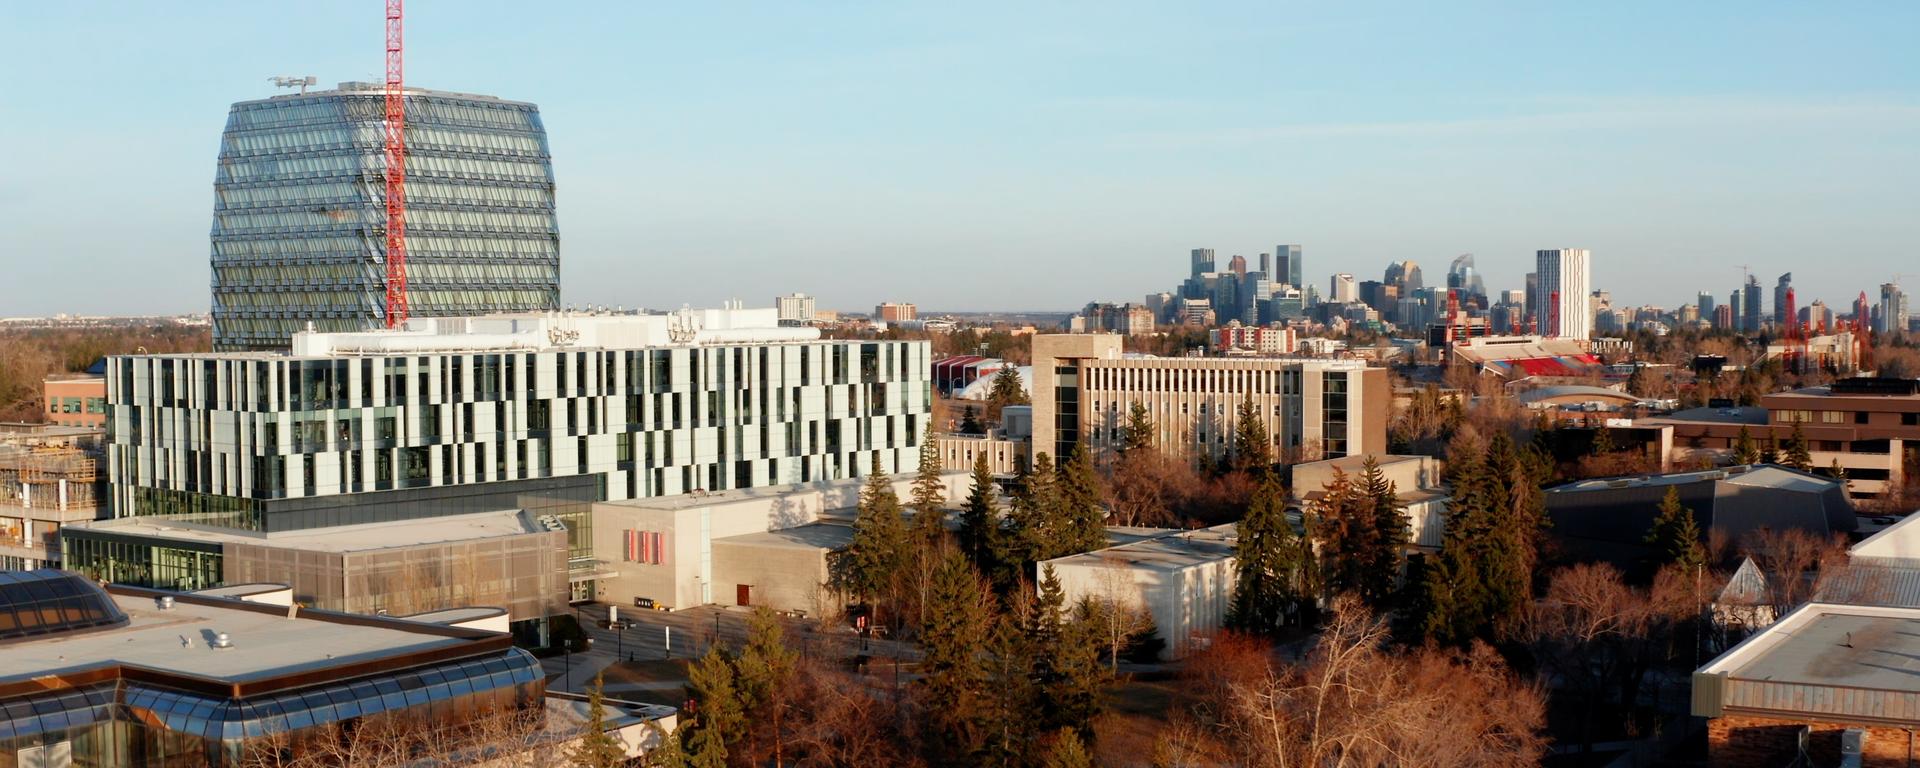 University of Calgary and the city skyline